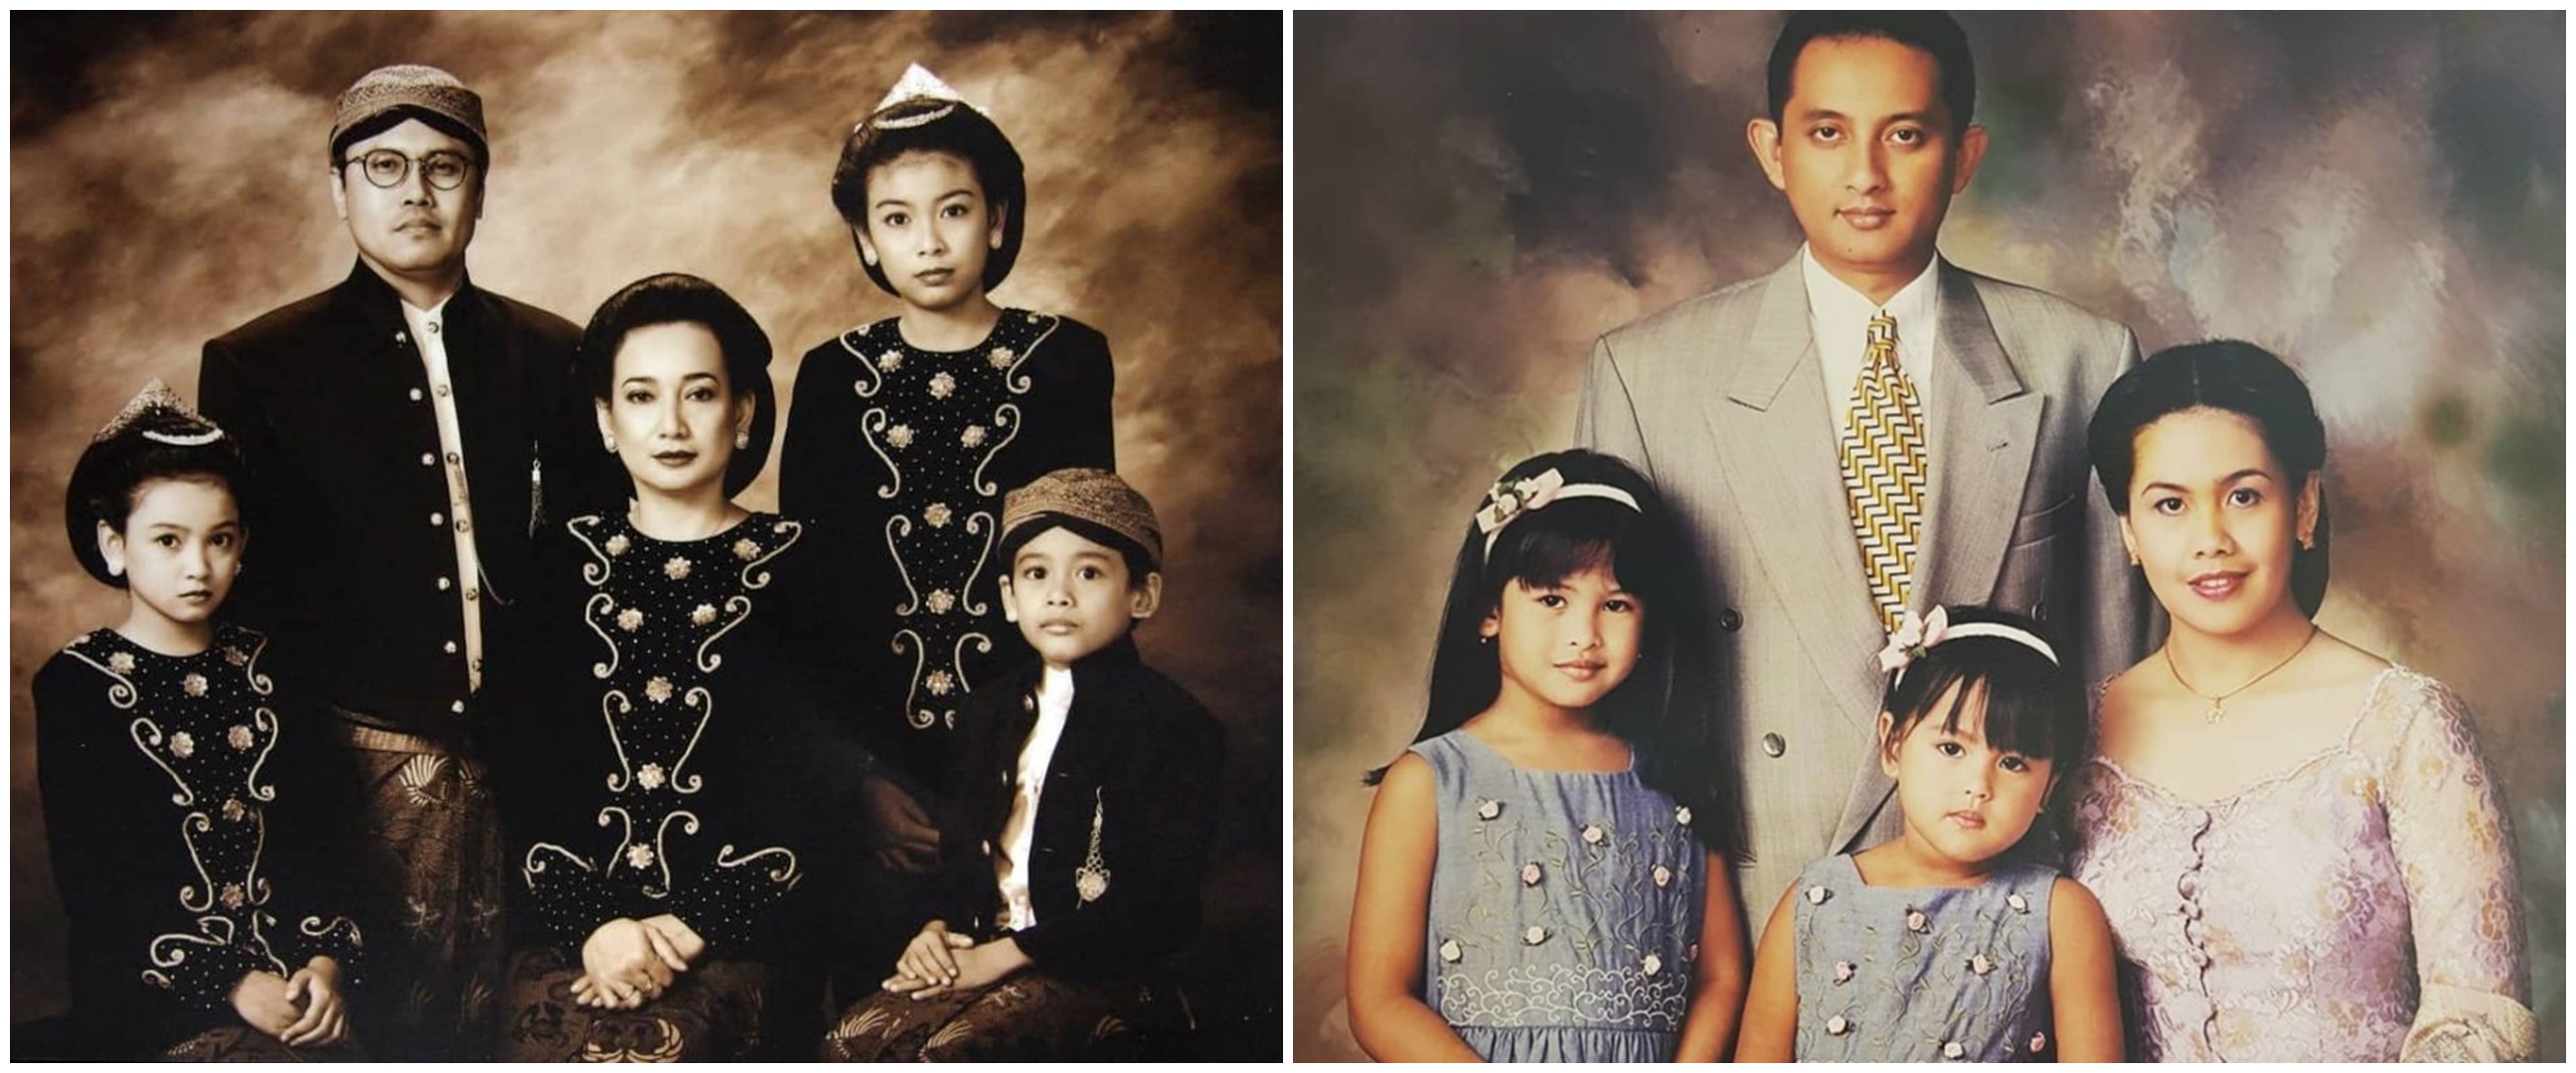 Potret lawas foto keluarga 10 seleb, bikin nostalgia